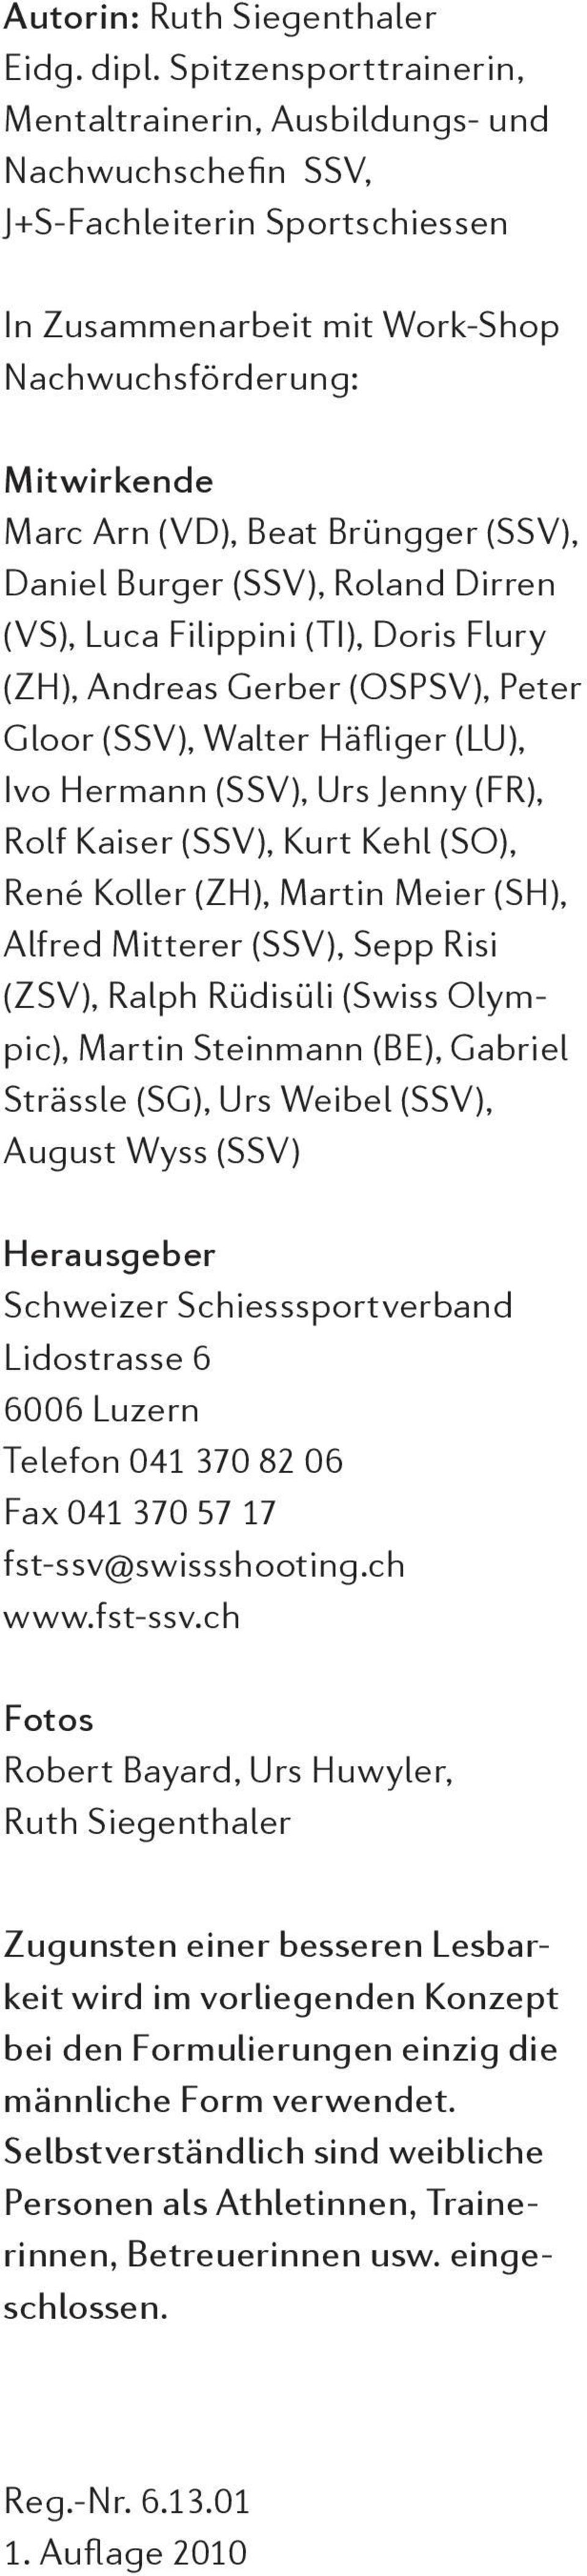 Brüngger (SSV), Daniel Burger (SSV), Roland Dirren (VS), Luca Filippini (TI), Doris Flury (ZH), Andreas Gerber (OSPSV), Peter Gloor (SSV), Walter Häfliger (LU), Ivo Hermann (SSV), Urs Jenny (FR),